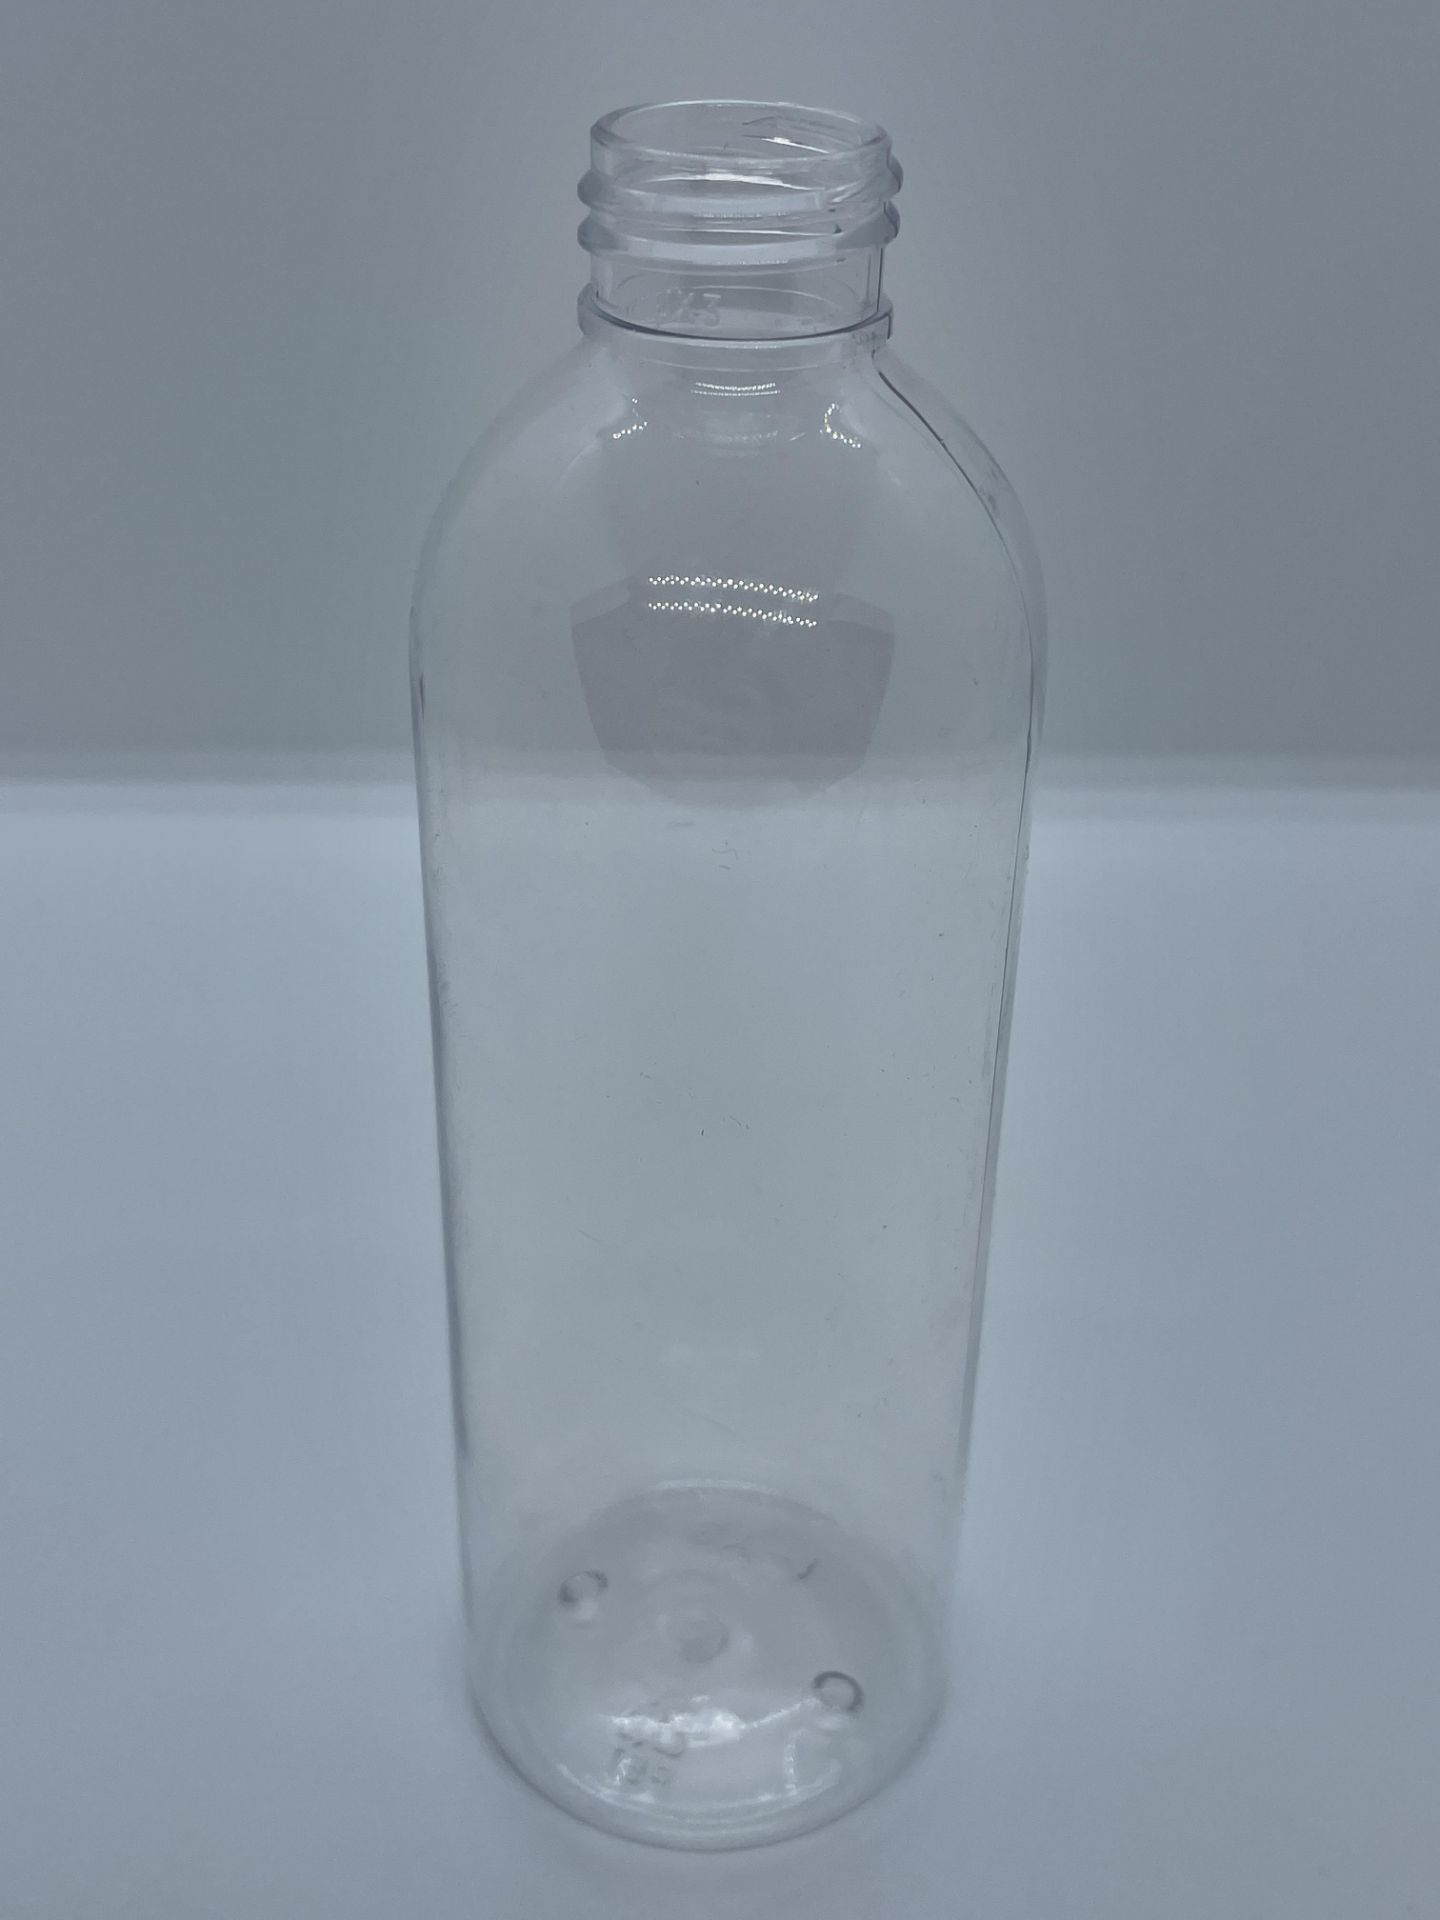 75,000 - Clear Plastic Bullet 8 oz Empty Bottles, 24-410 Threading Neck, 6.25" Tall, 2" Diameter - Image 3 of 5